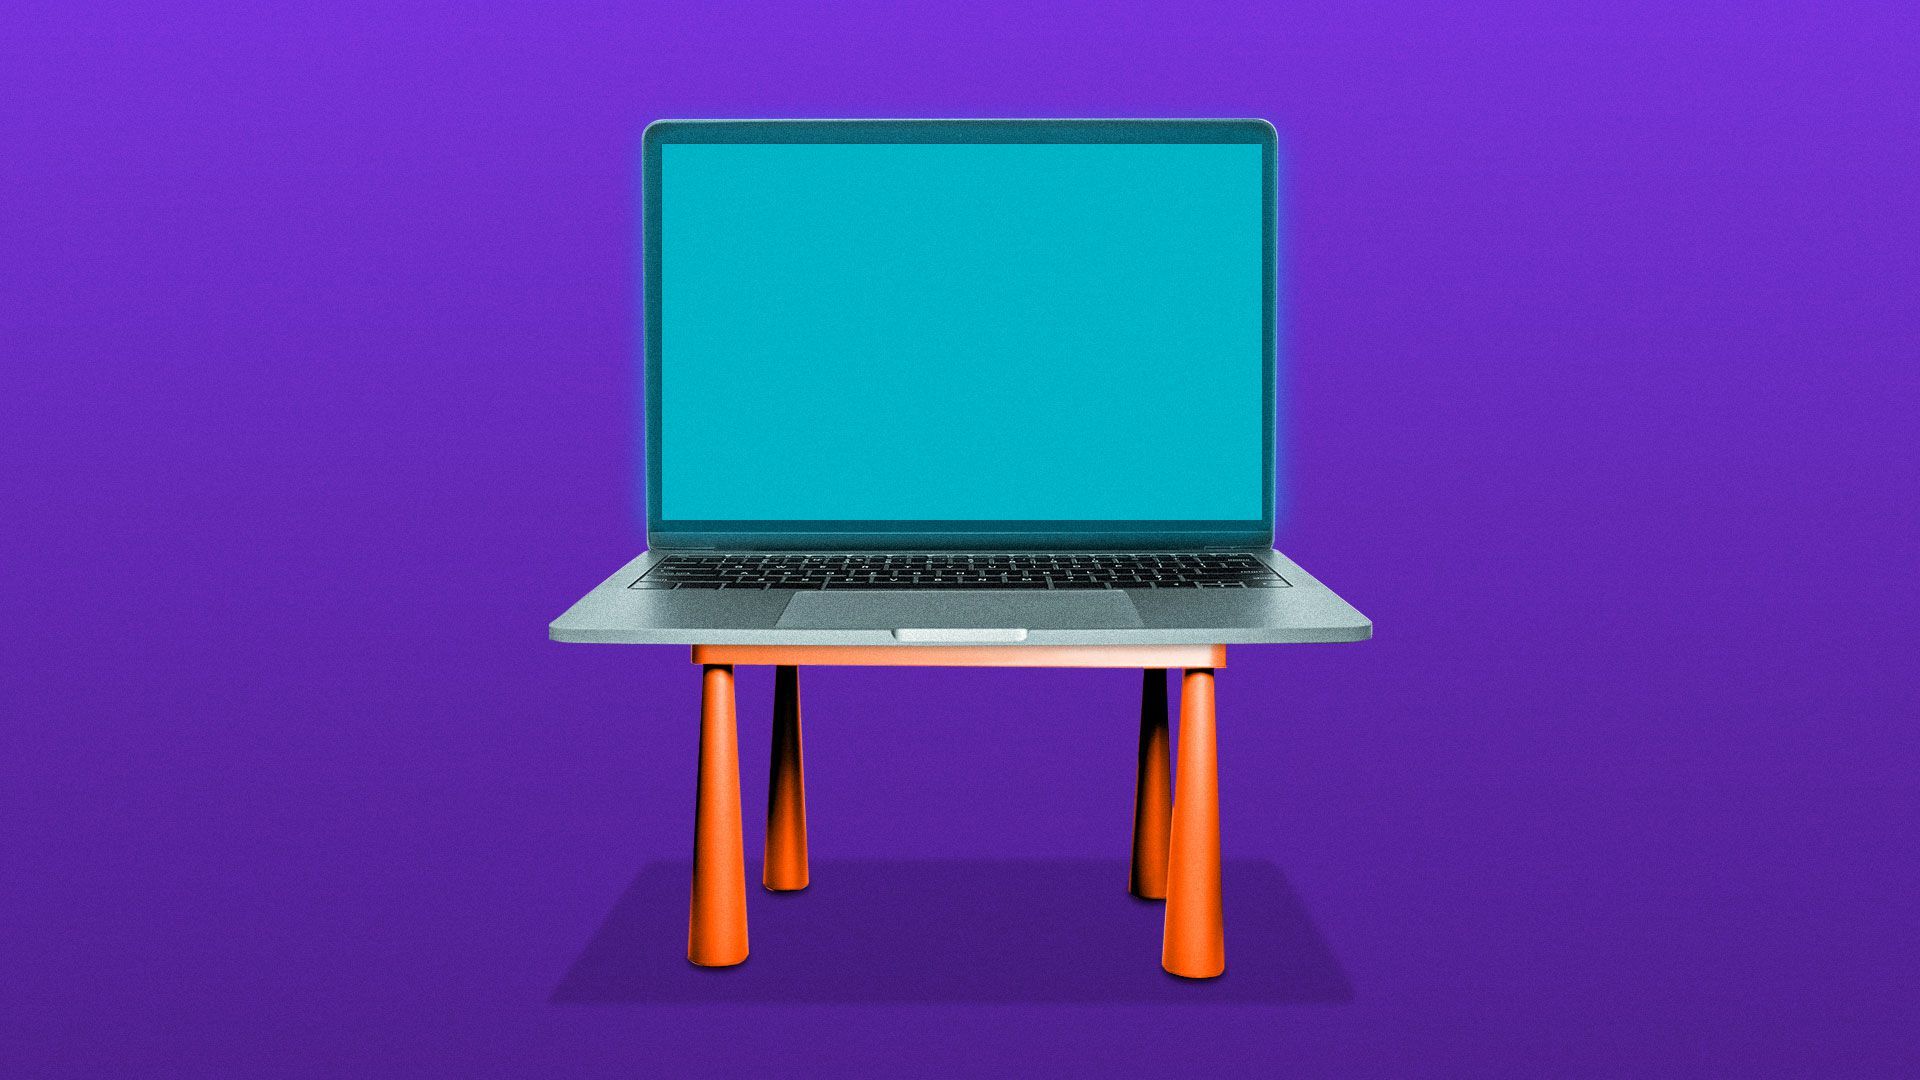 Illustration of laptop on a mini child’s desk